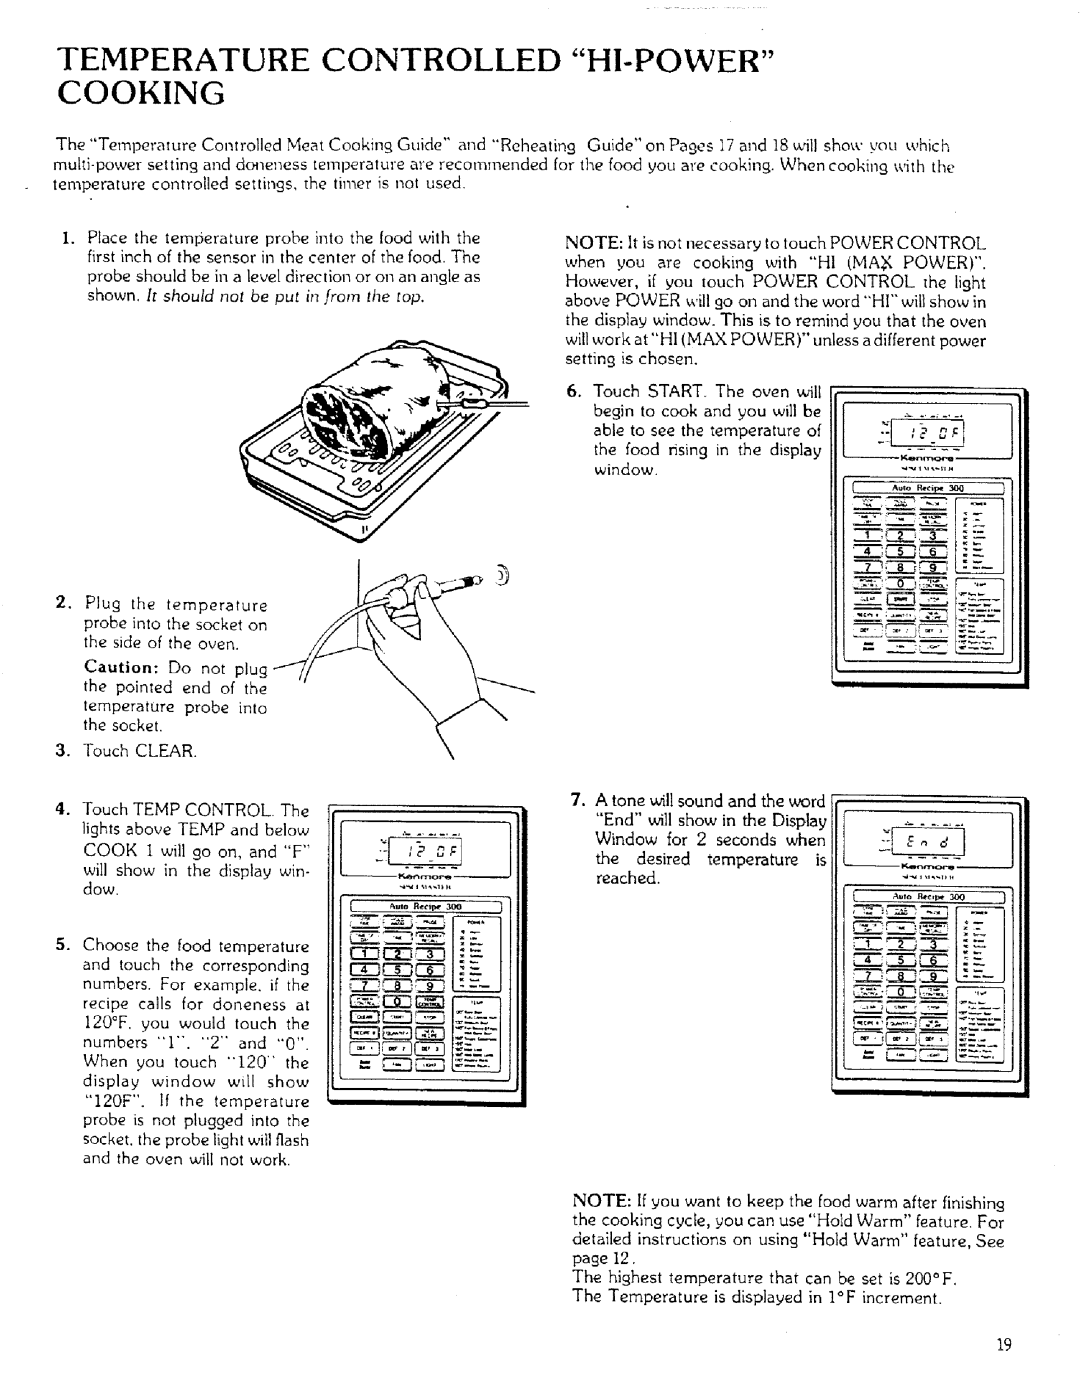 Sears 85951 manual Temperature Controlled Hi-Powercooking, C_22_Z53 